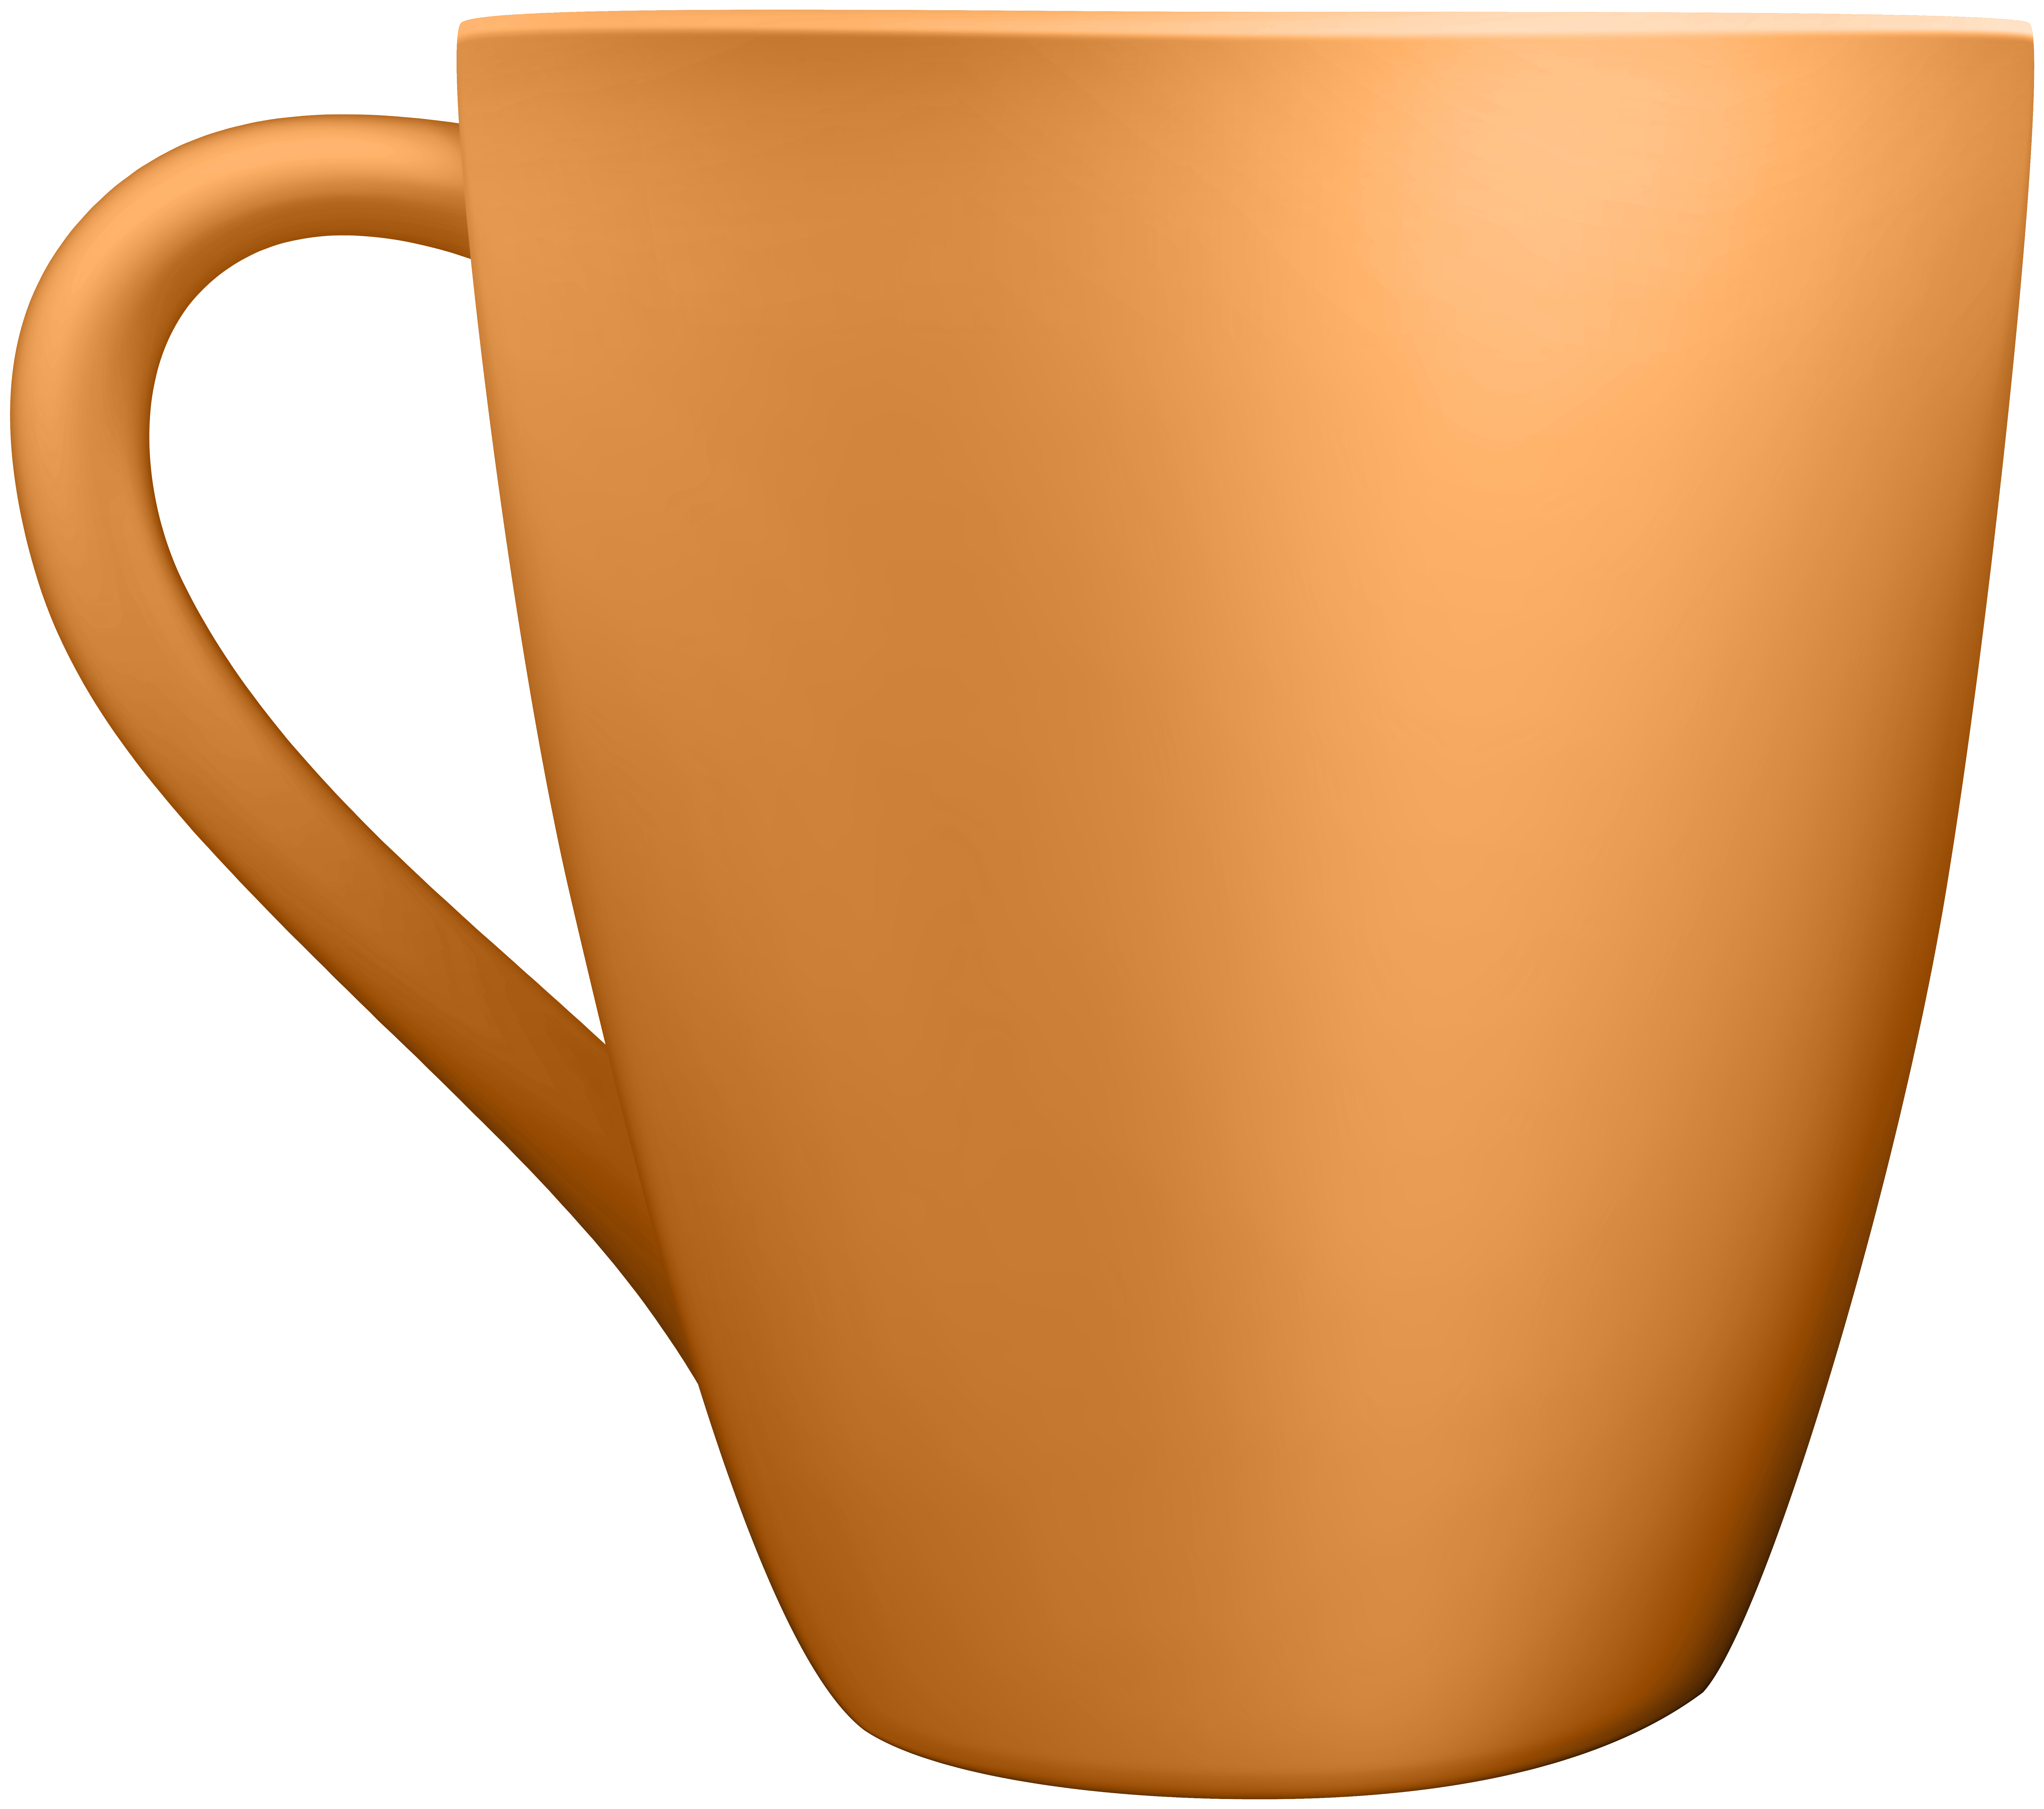 Orange ceramic mug.